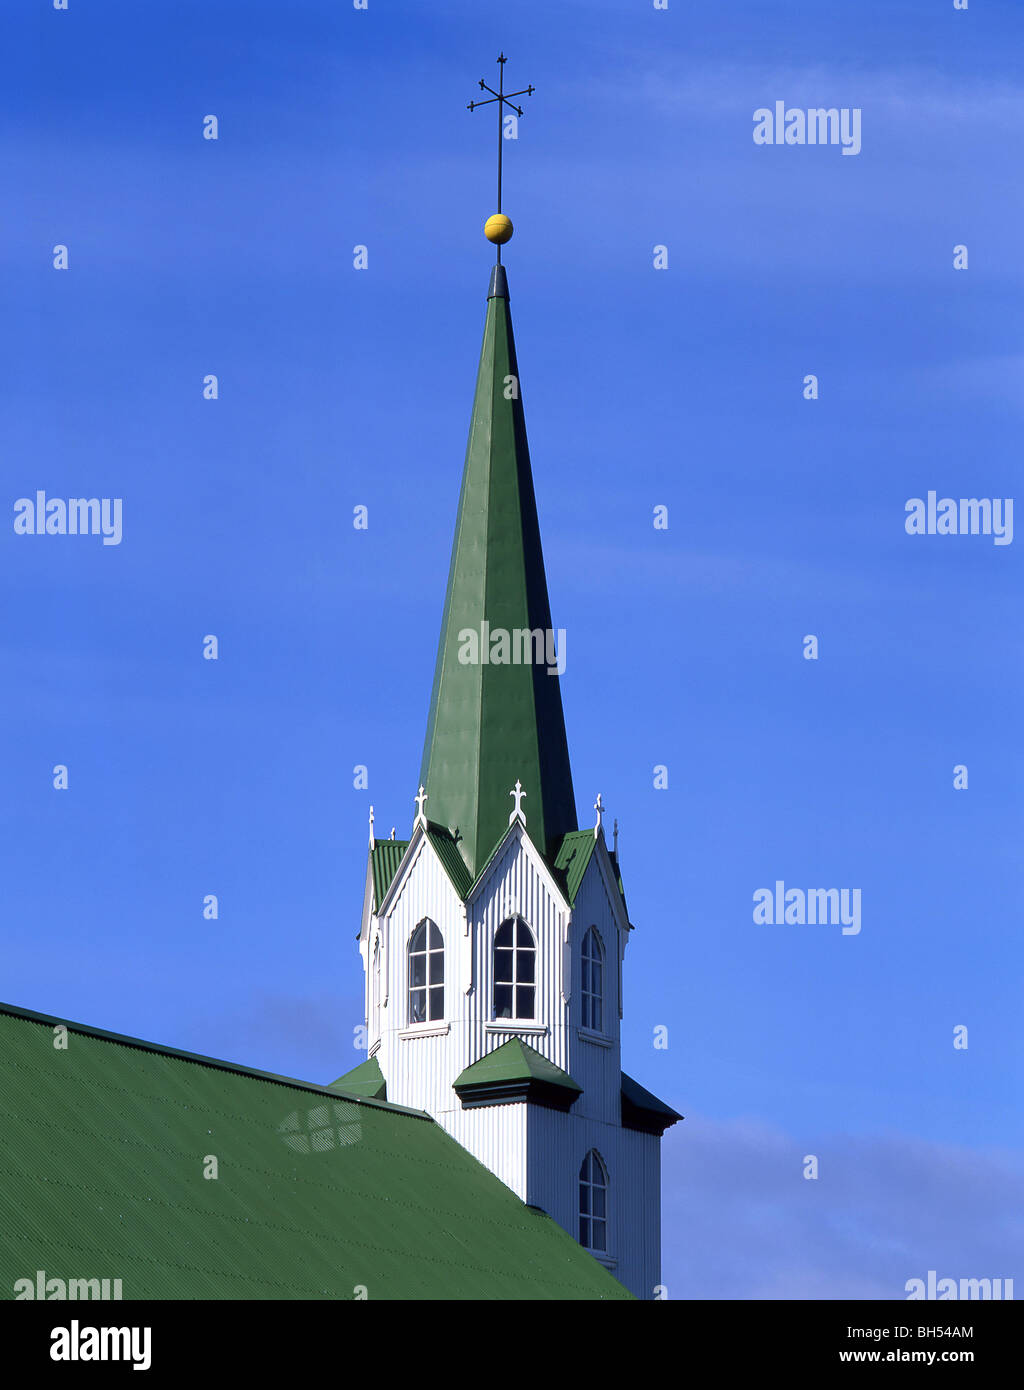 Frikirkjan chiesa luterana guglia, Bernhoftstorfan, Reykjavik, capoluogo della regione, Repubblica di Islanda Foto Stock